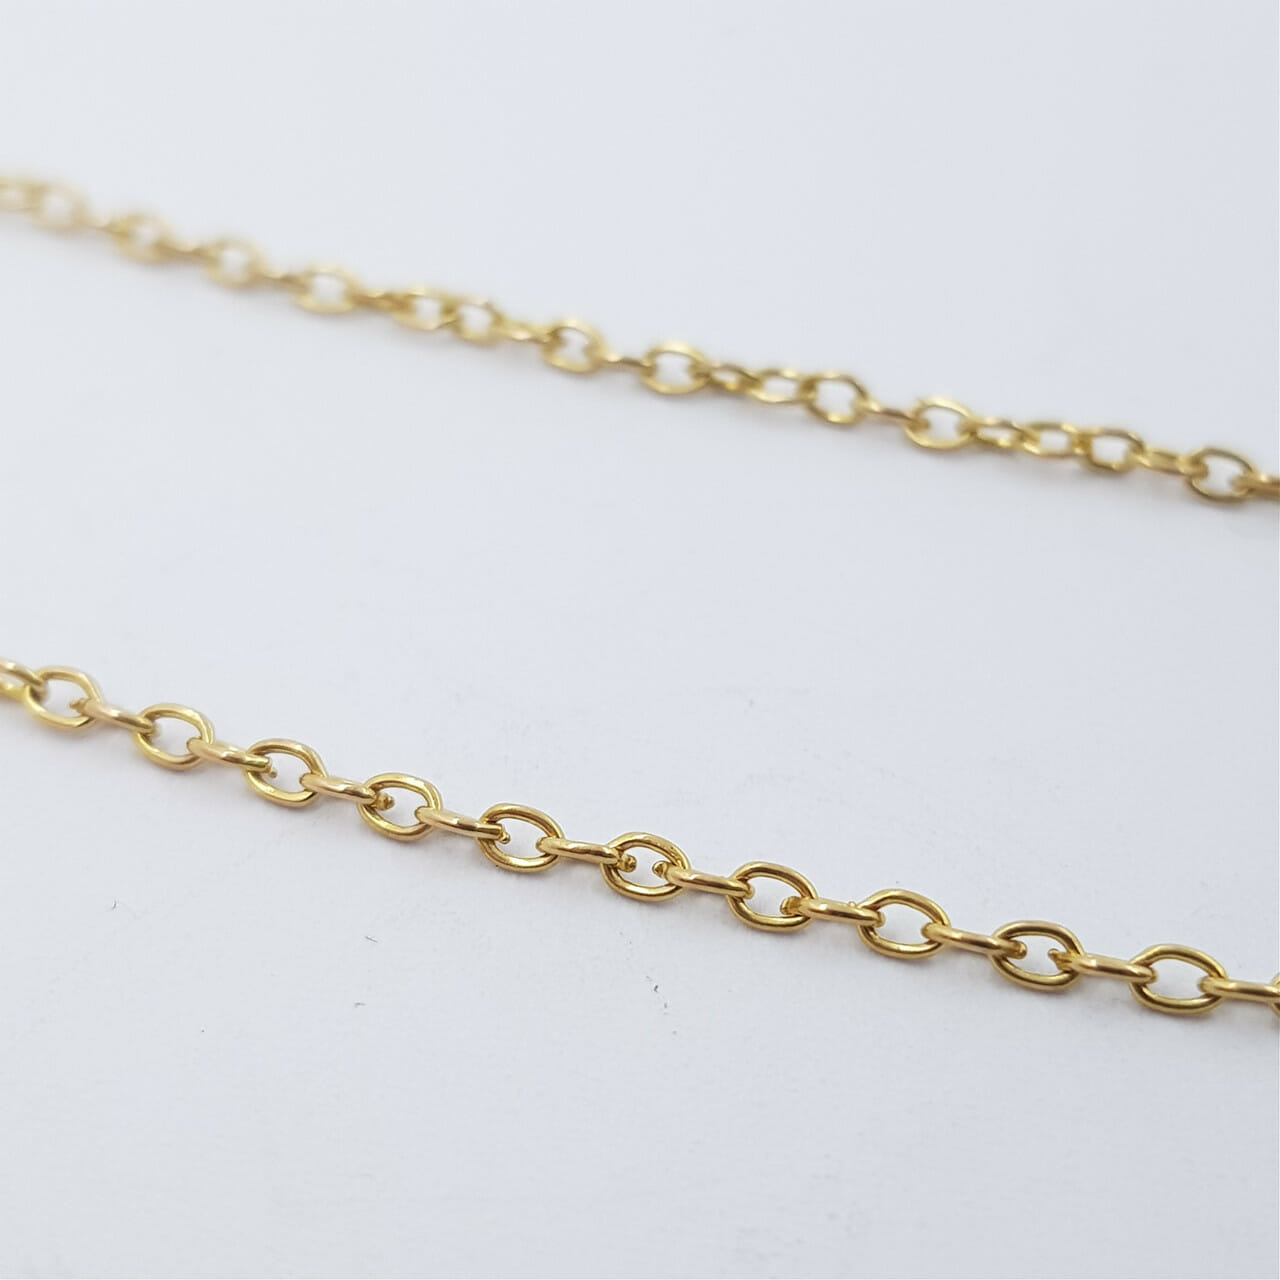 9ct Yellow Gold Antique Cobalt Glass Cable Link Necklace 41cm #8328